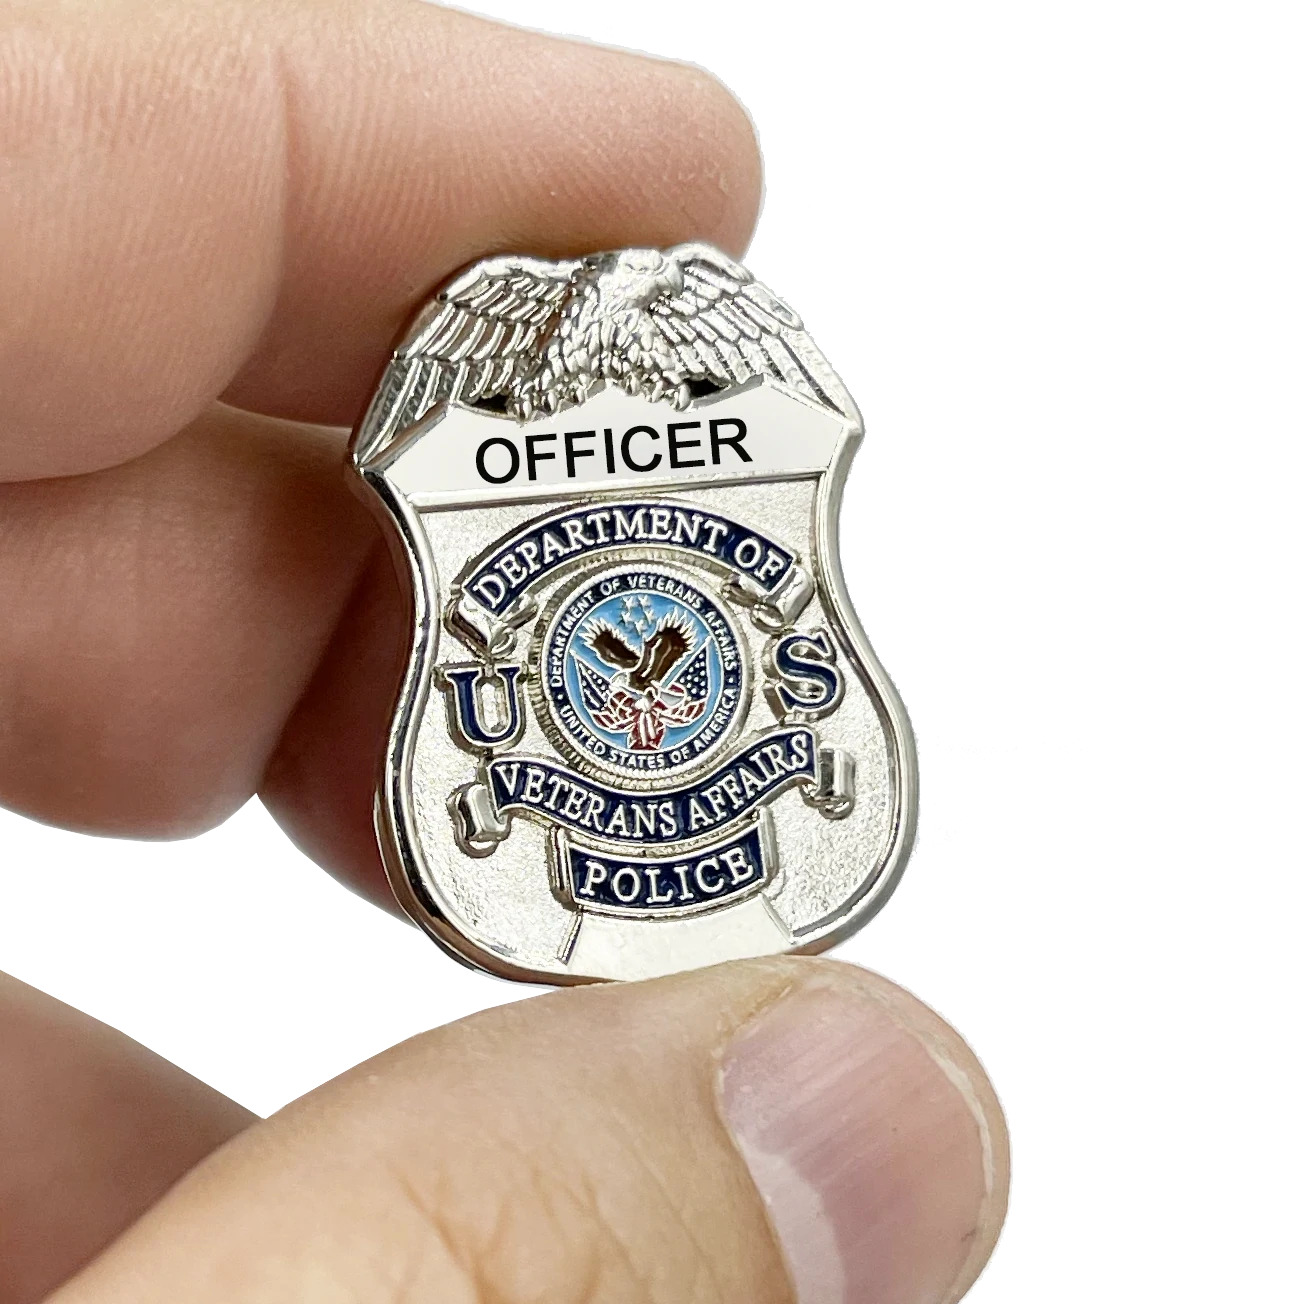 BL6-018 VA Veterans Affairs Police OFFICER Administration shield lapel pin